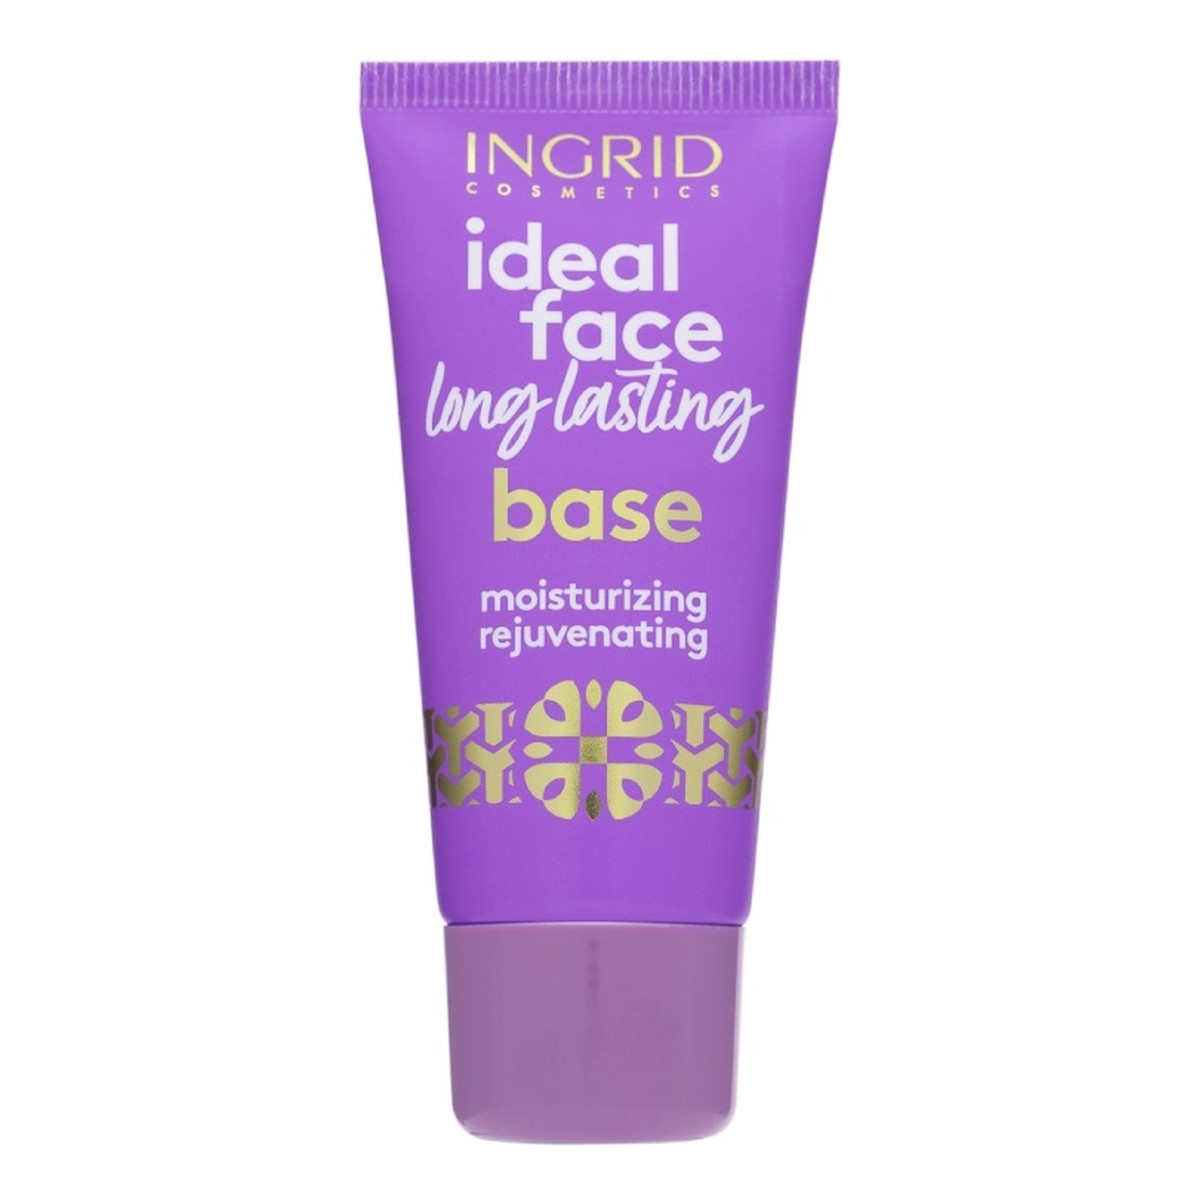 Ingrid Ideal face long lasting base nawilżająca baza pod makijaż 40ml